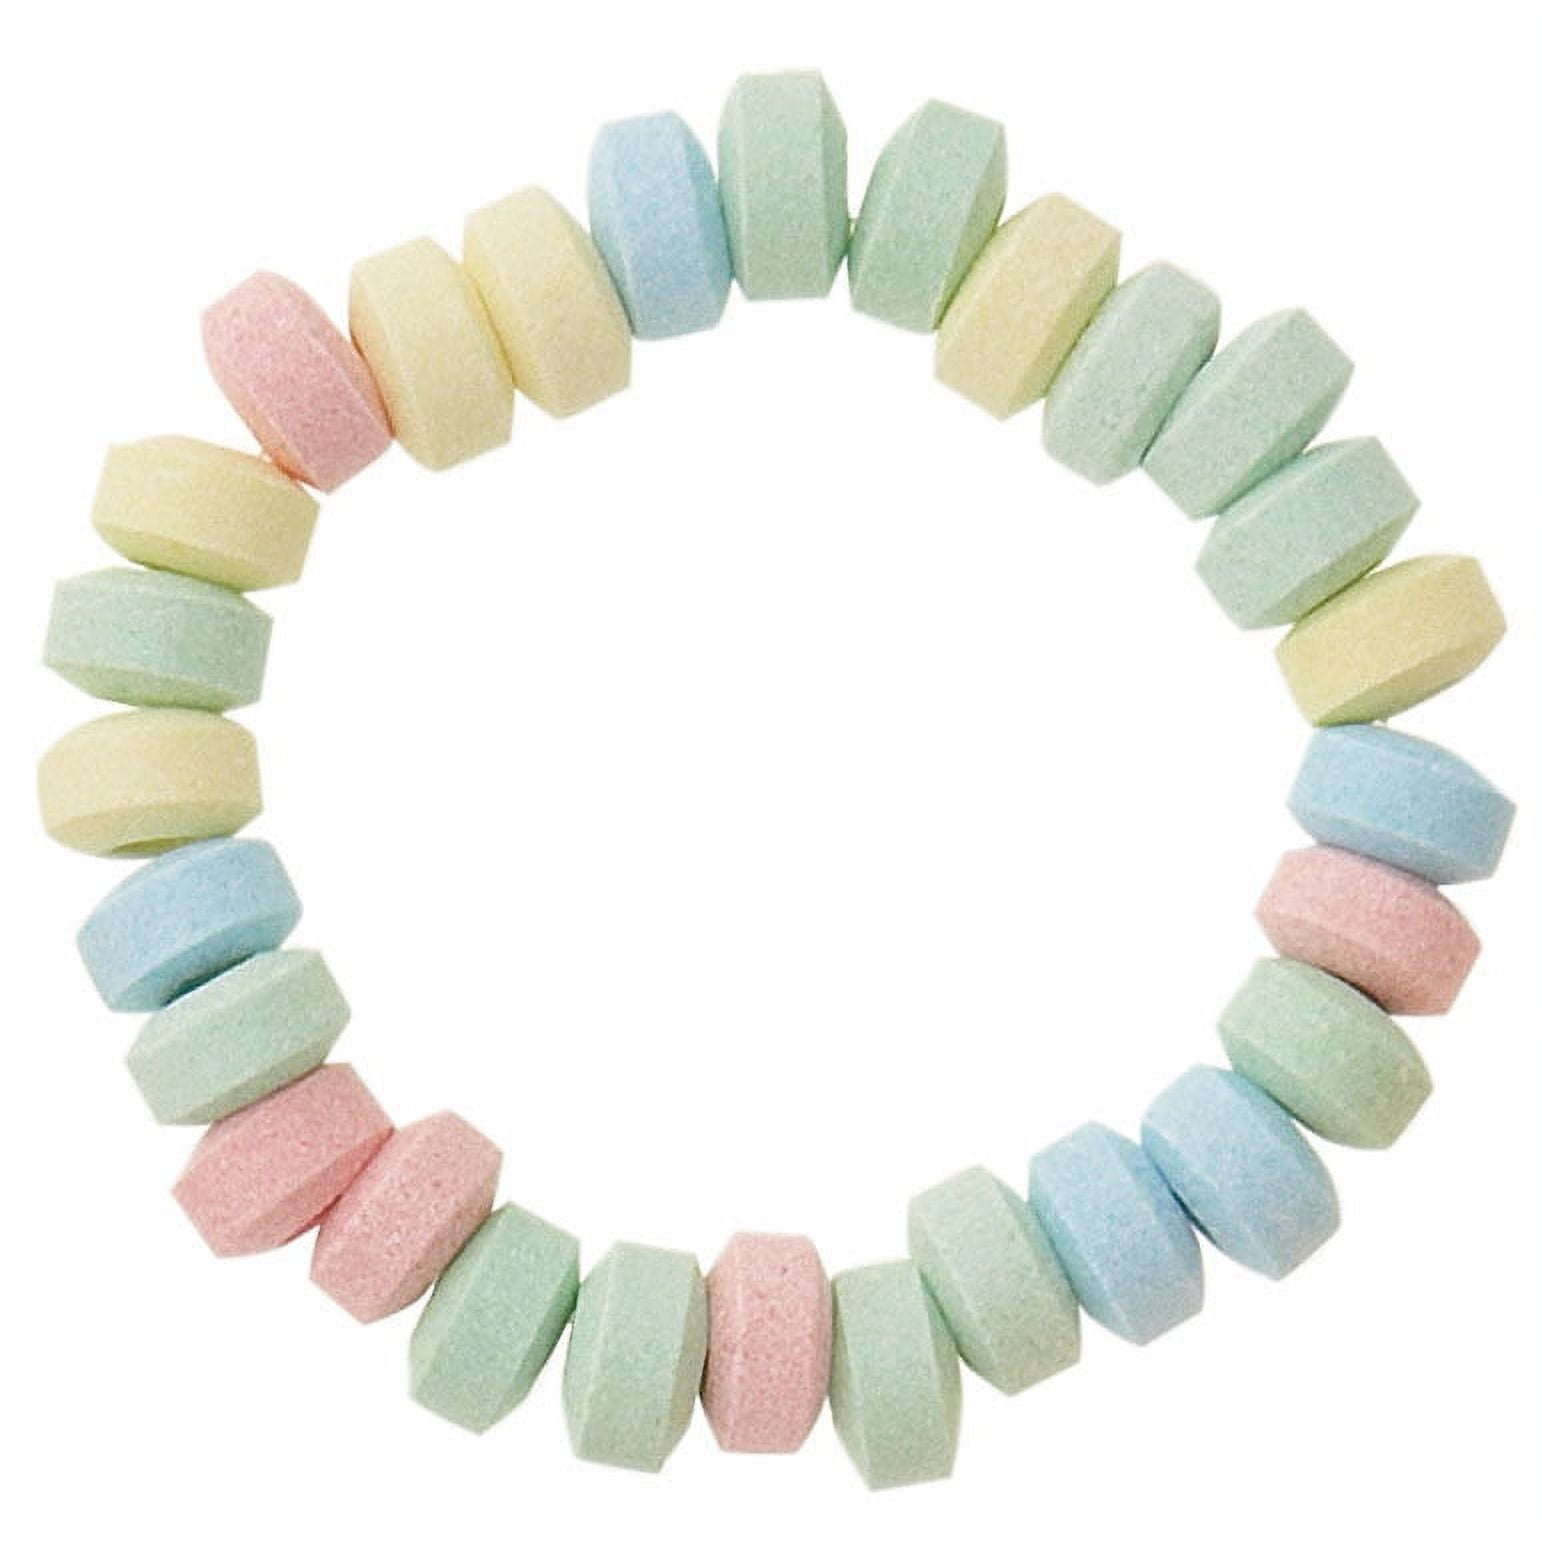 Amos Sweets Candy Bracelets, 2.12 oz, 6 CT 